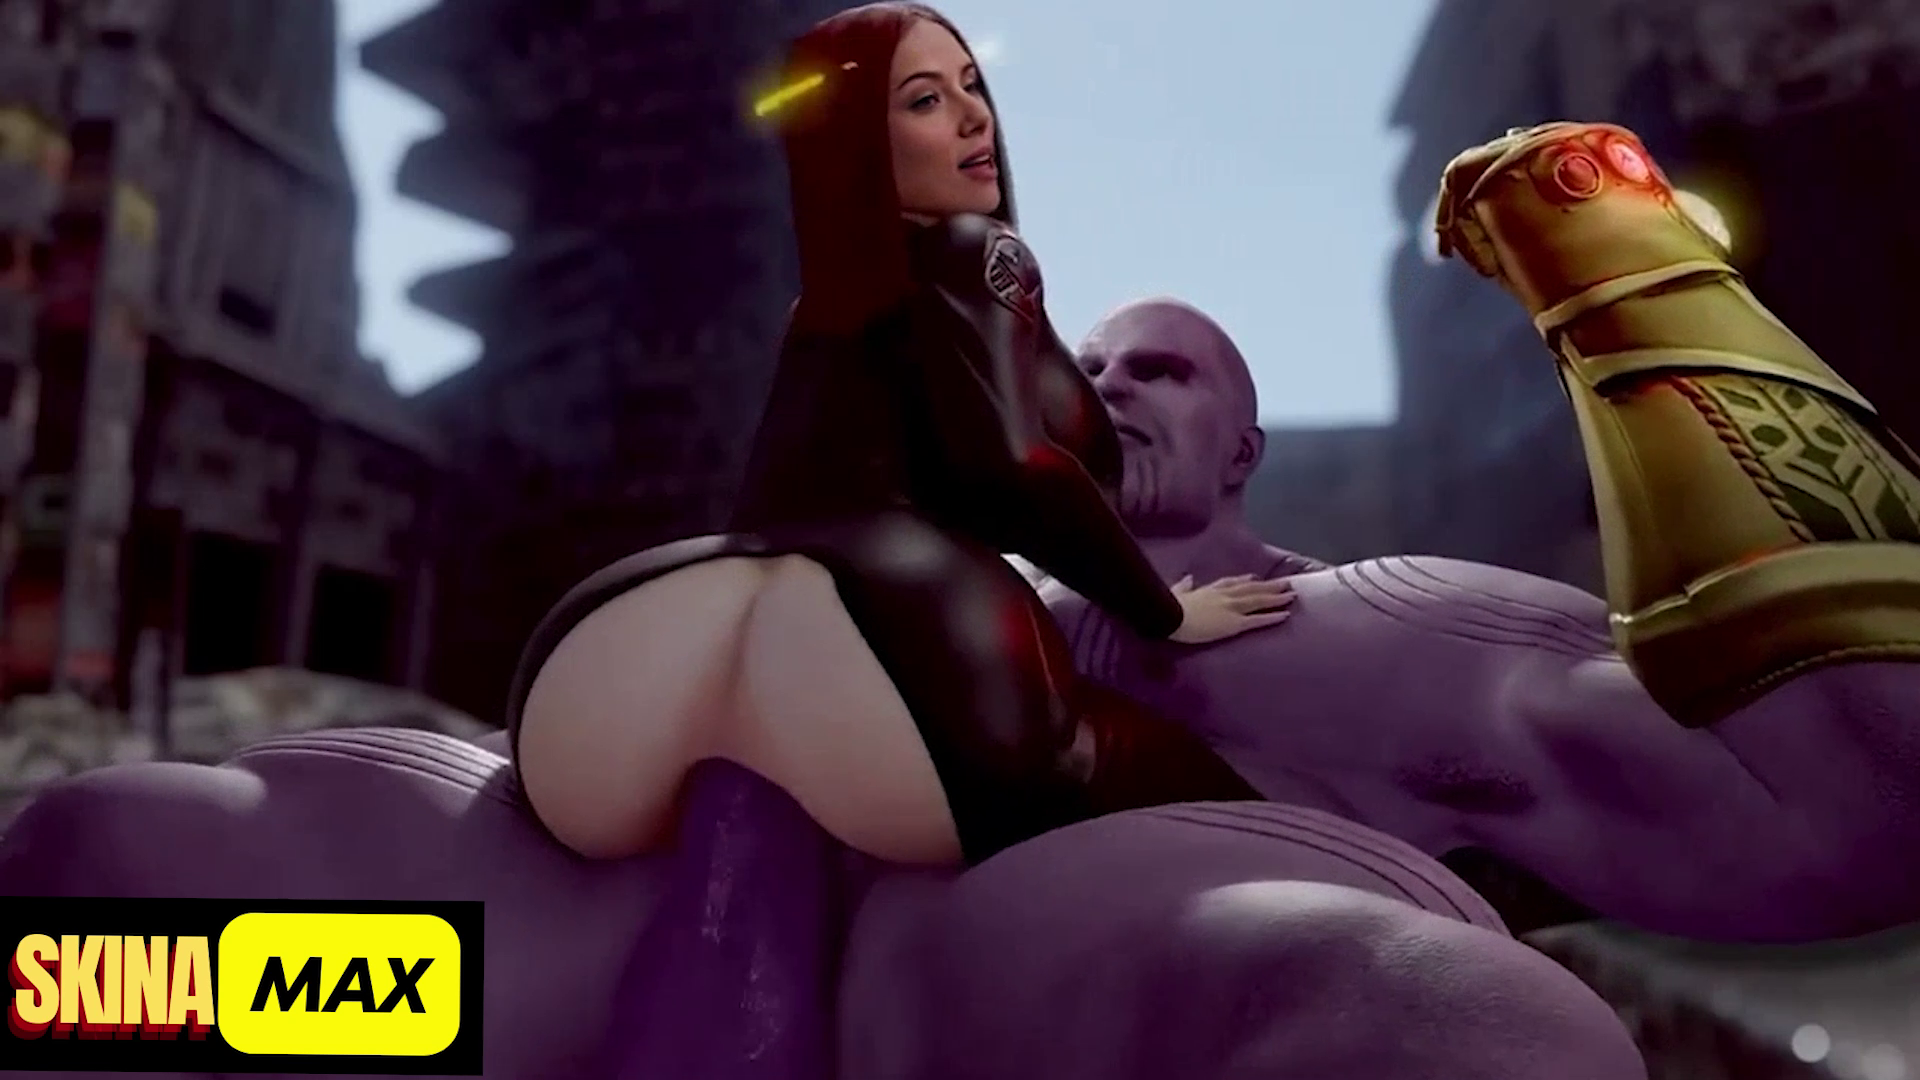 Black Widow Gang Bang - Black widow is Broken by Thanos. Cloned Voice! DeepFake Porn - MrDeepFakes